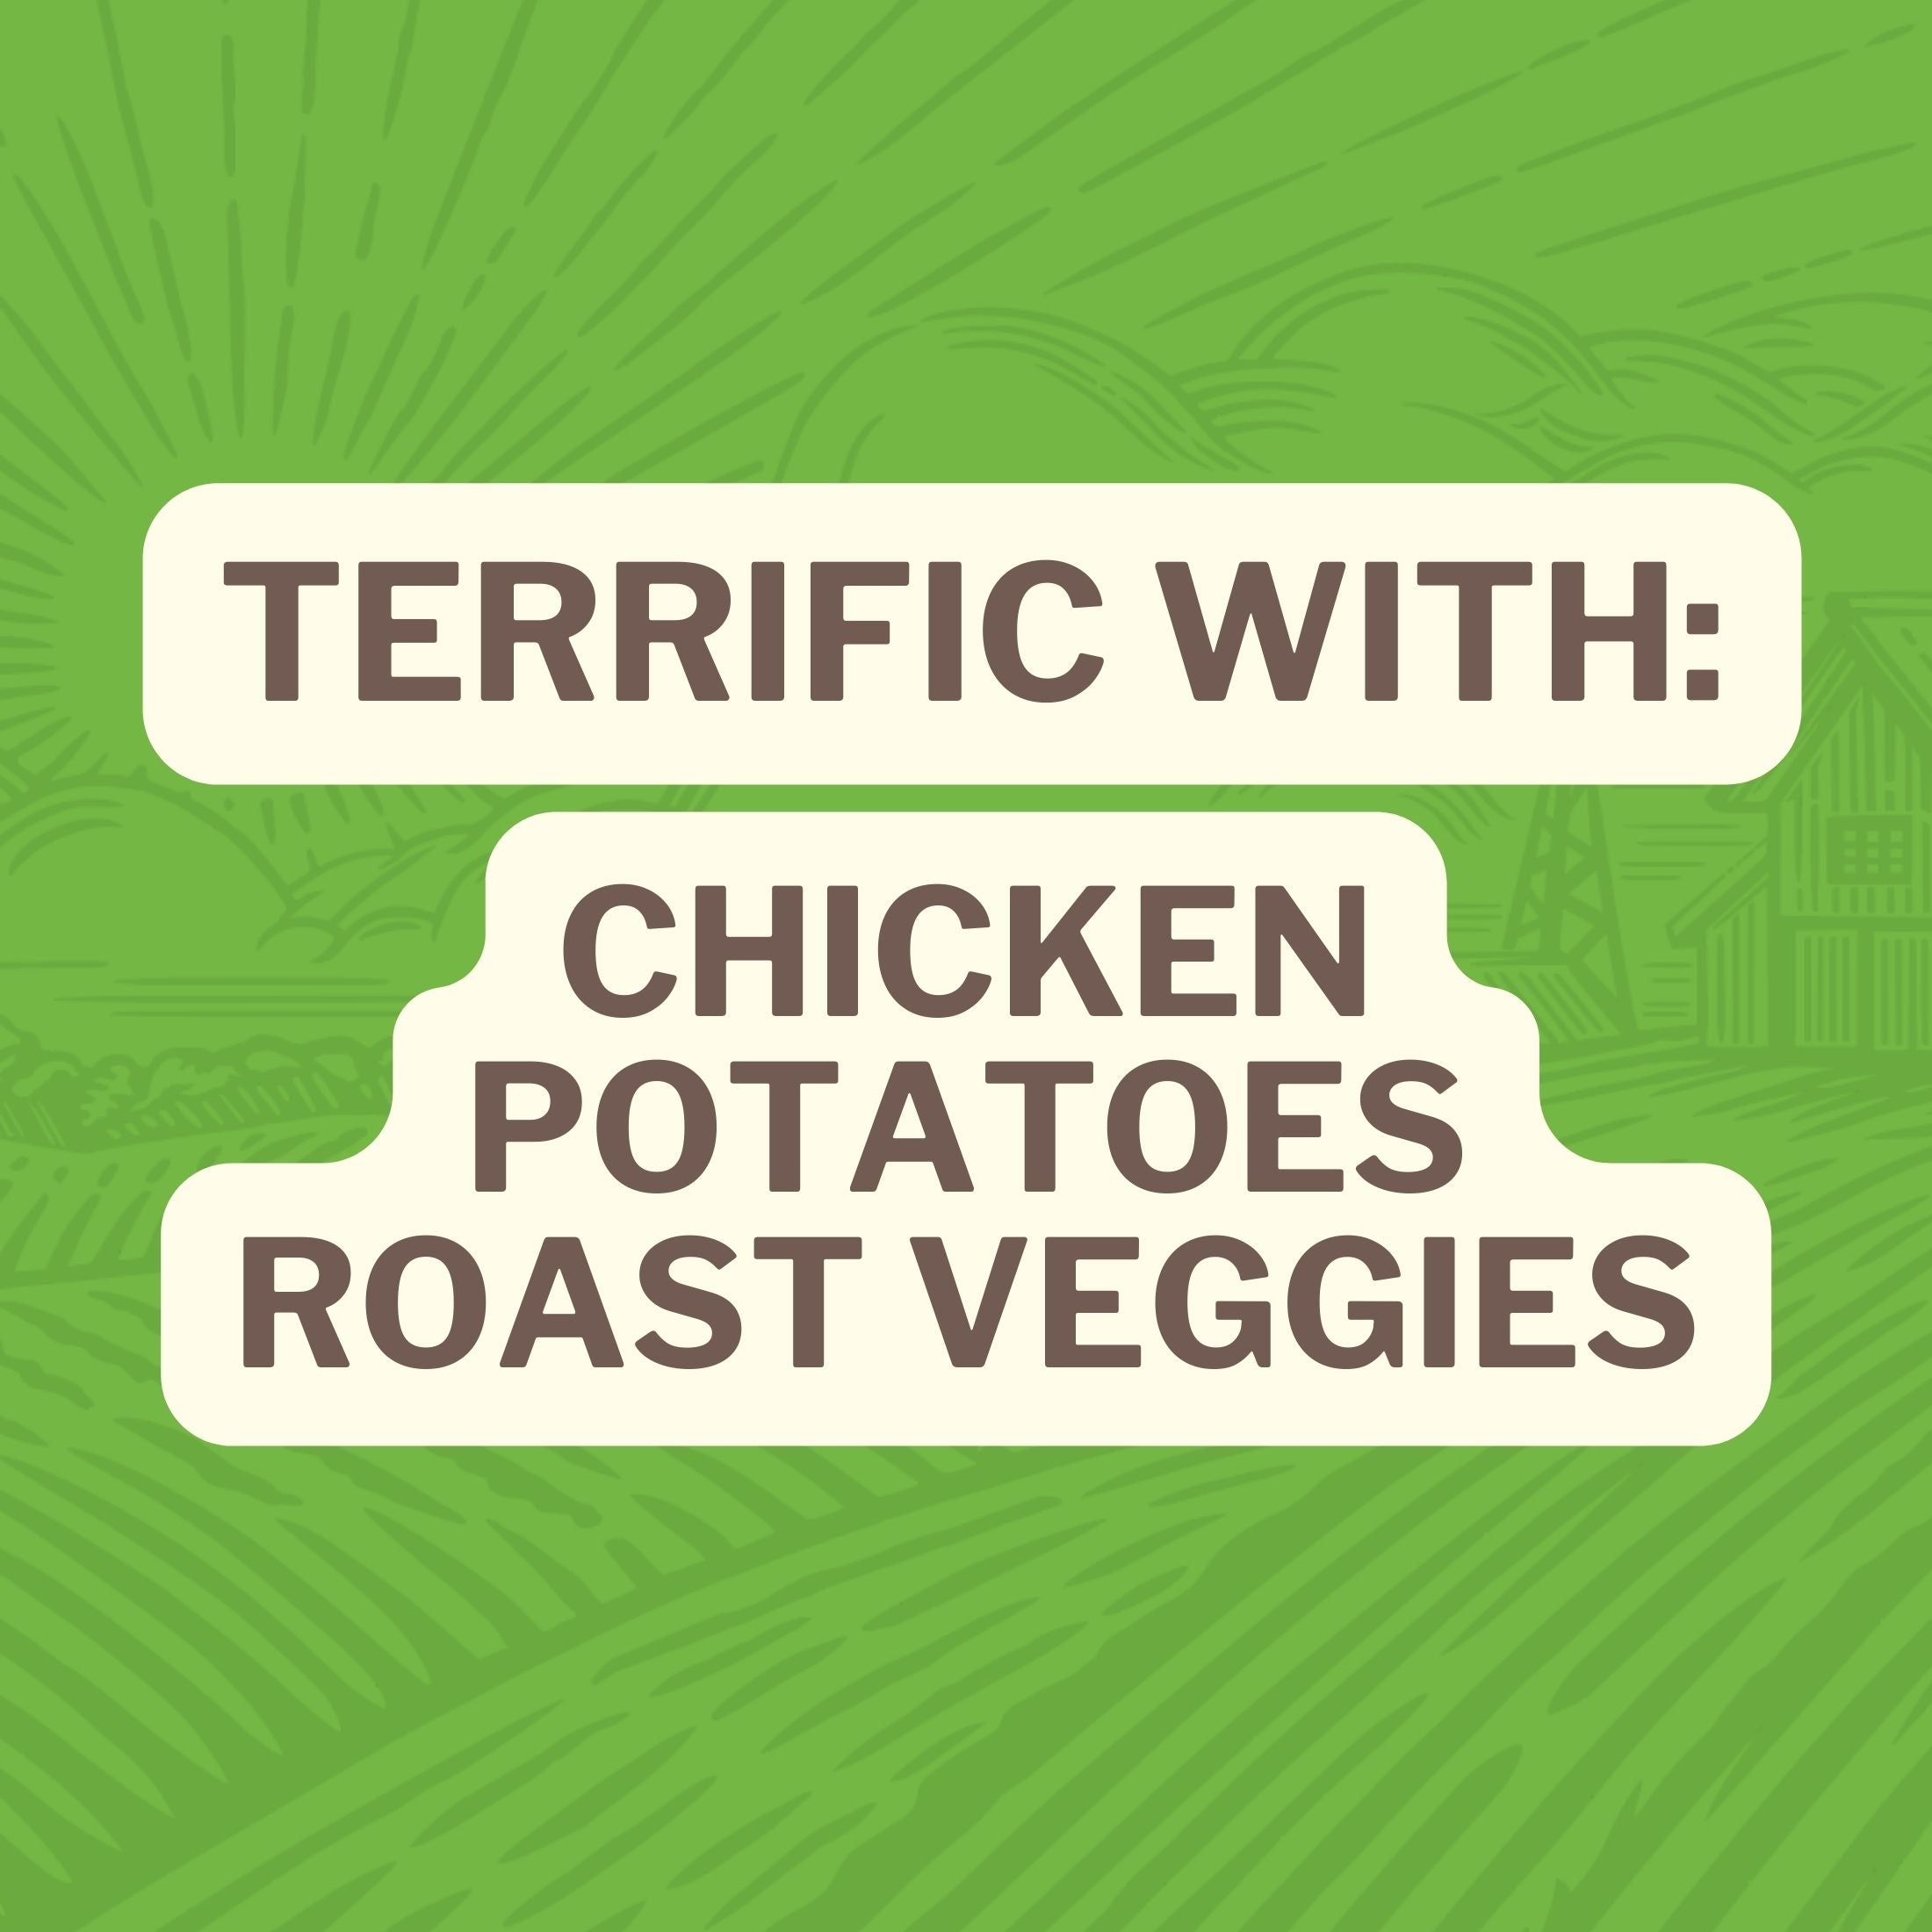 Terrific With: Chicken Potatoes Roasted Veggies